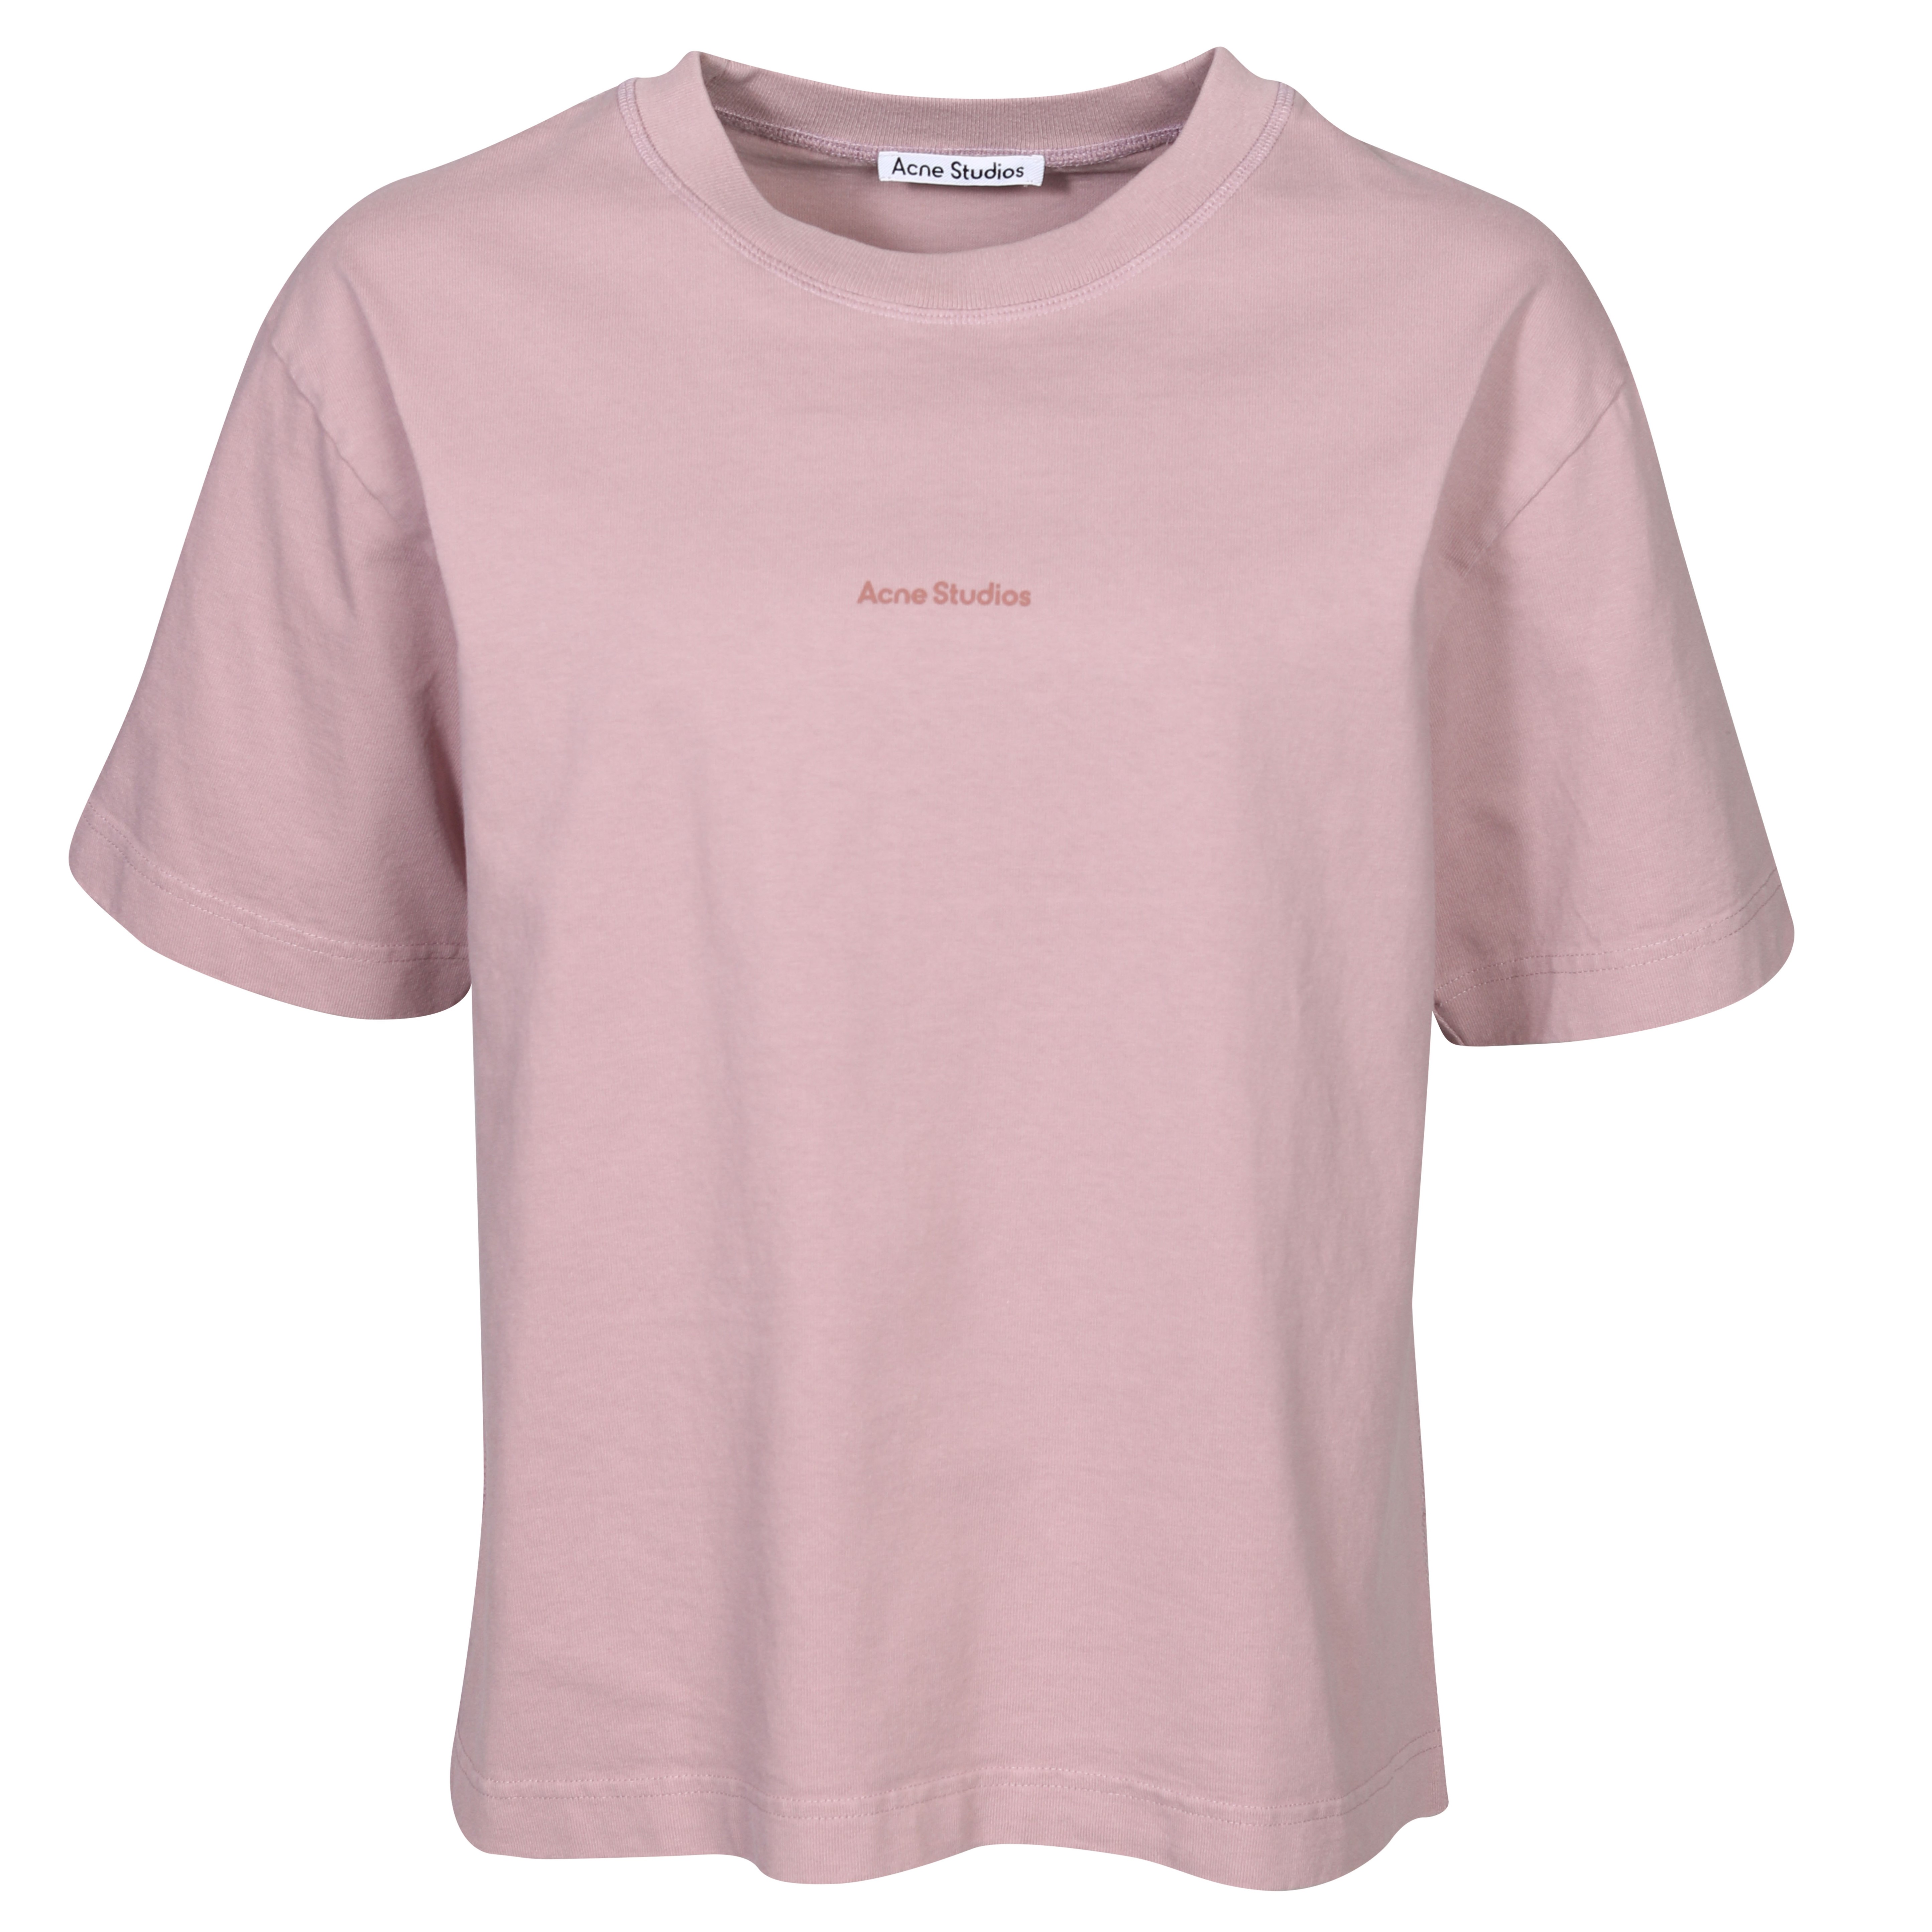 Acne Studios Stamp T-Shirt in Mauve Pink M